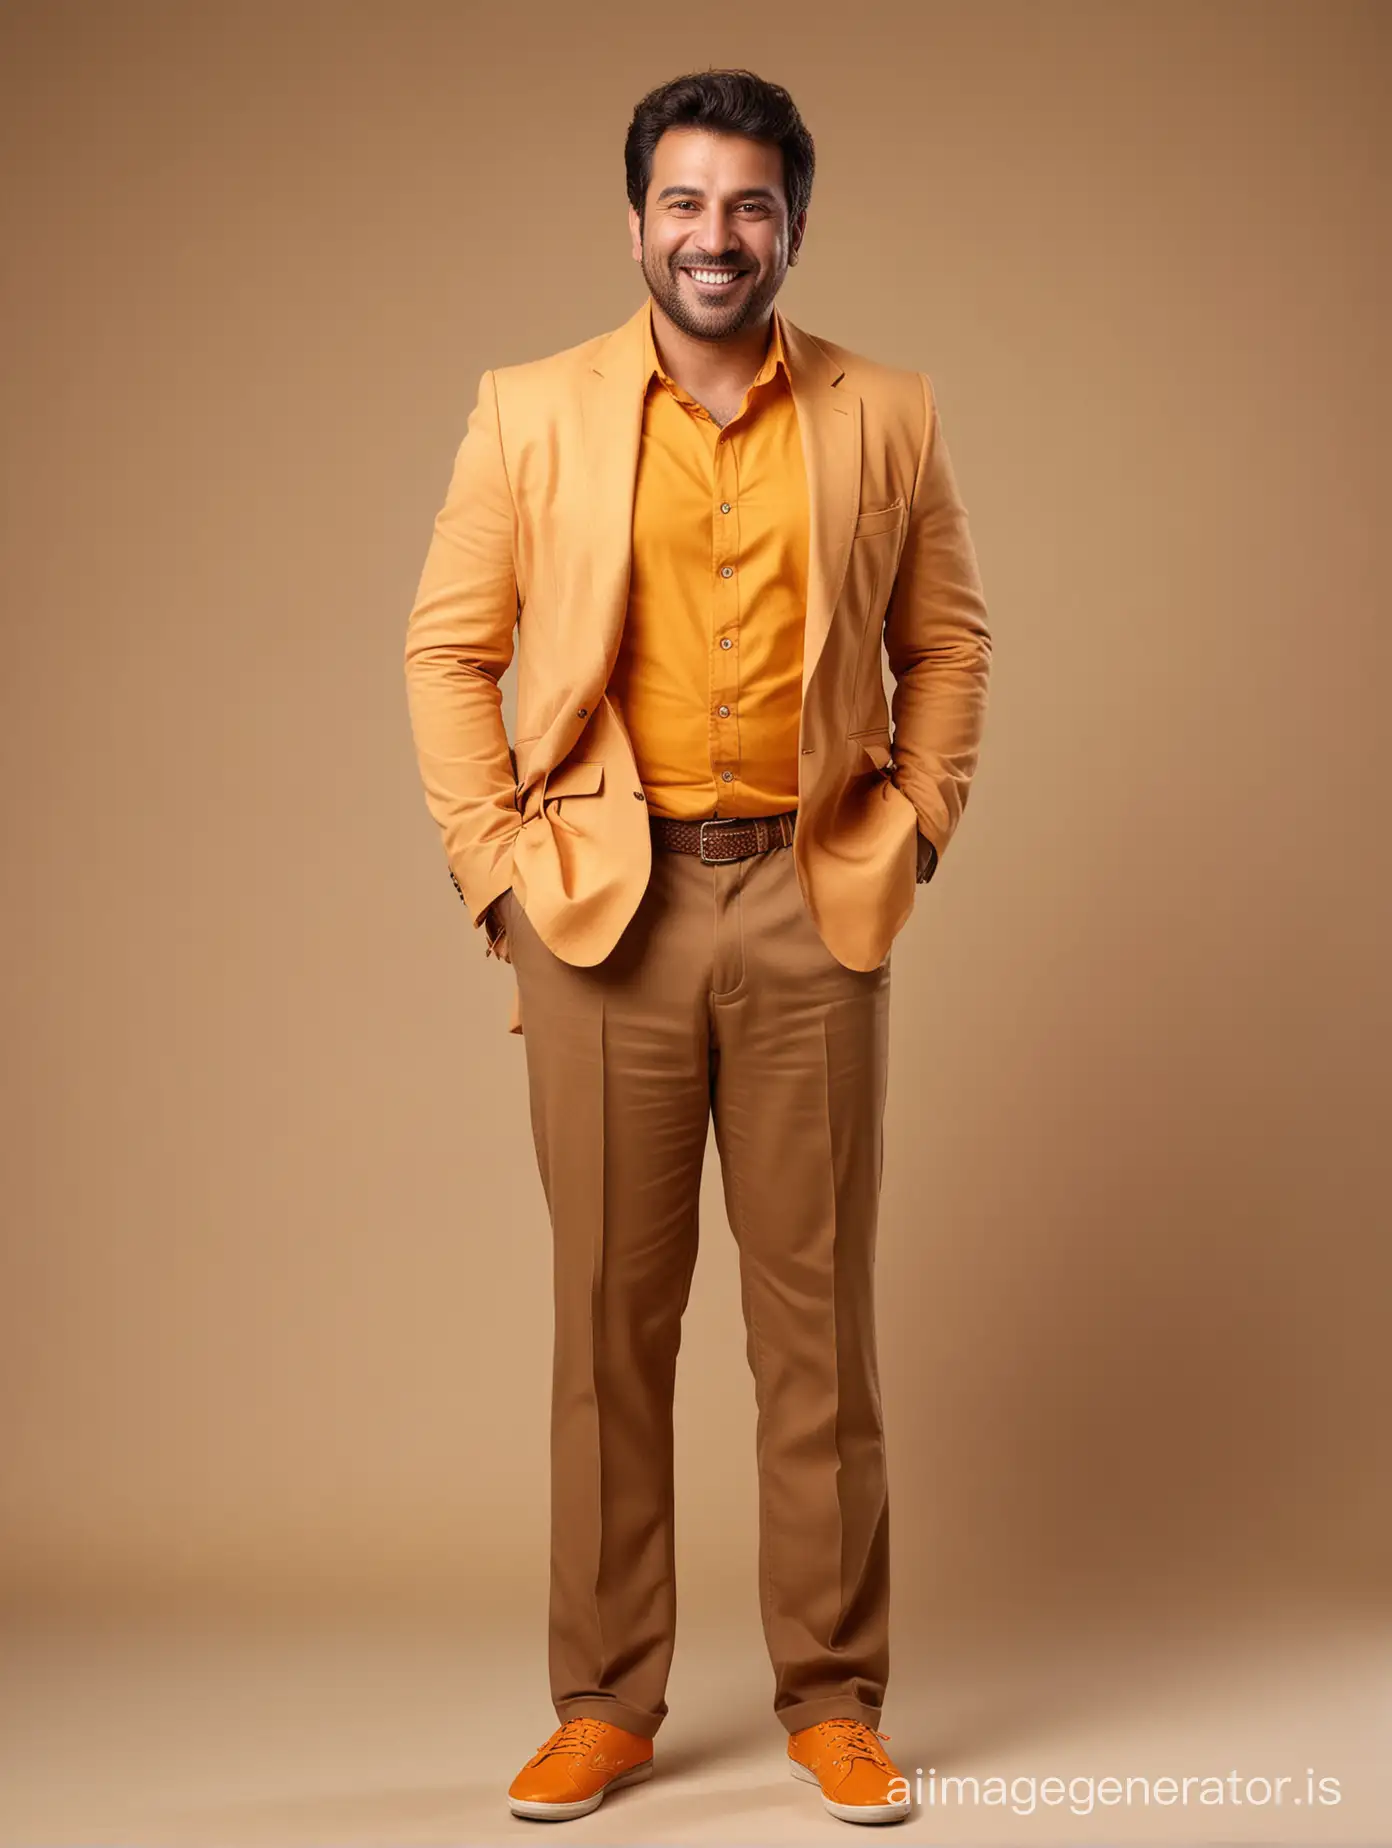 iranian fat happy man 40 years old, mango blazer, orange shirt, cream pants, yellow shoes, brown hair, full body shot, fantasy light orange solid background, dramatic lighting